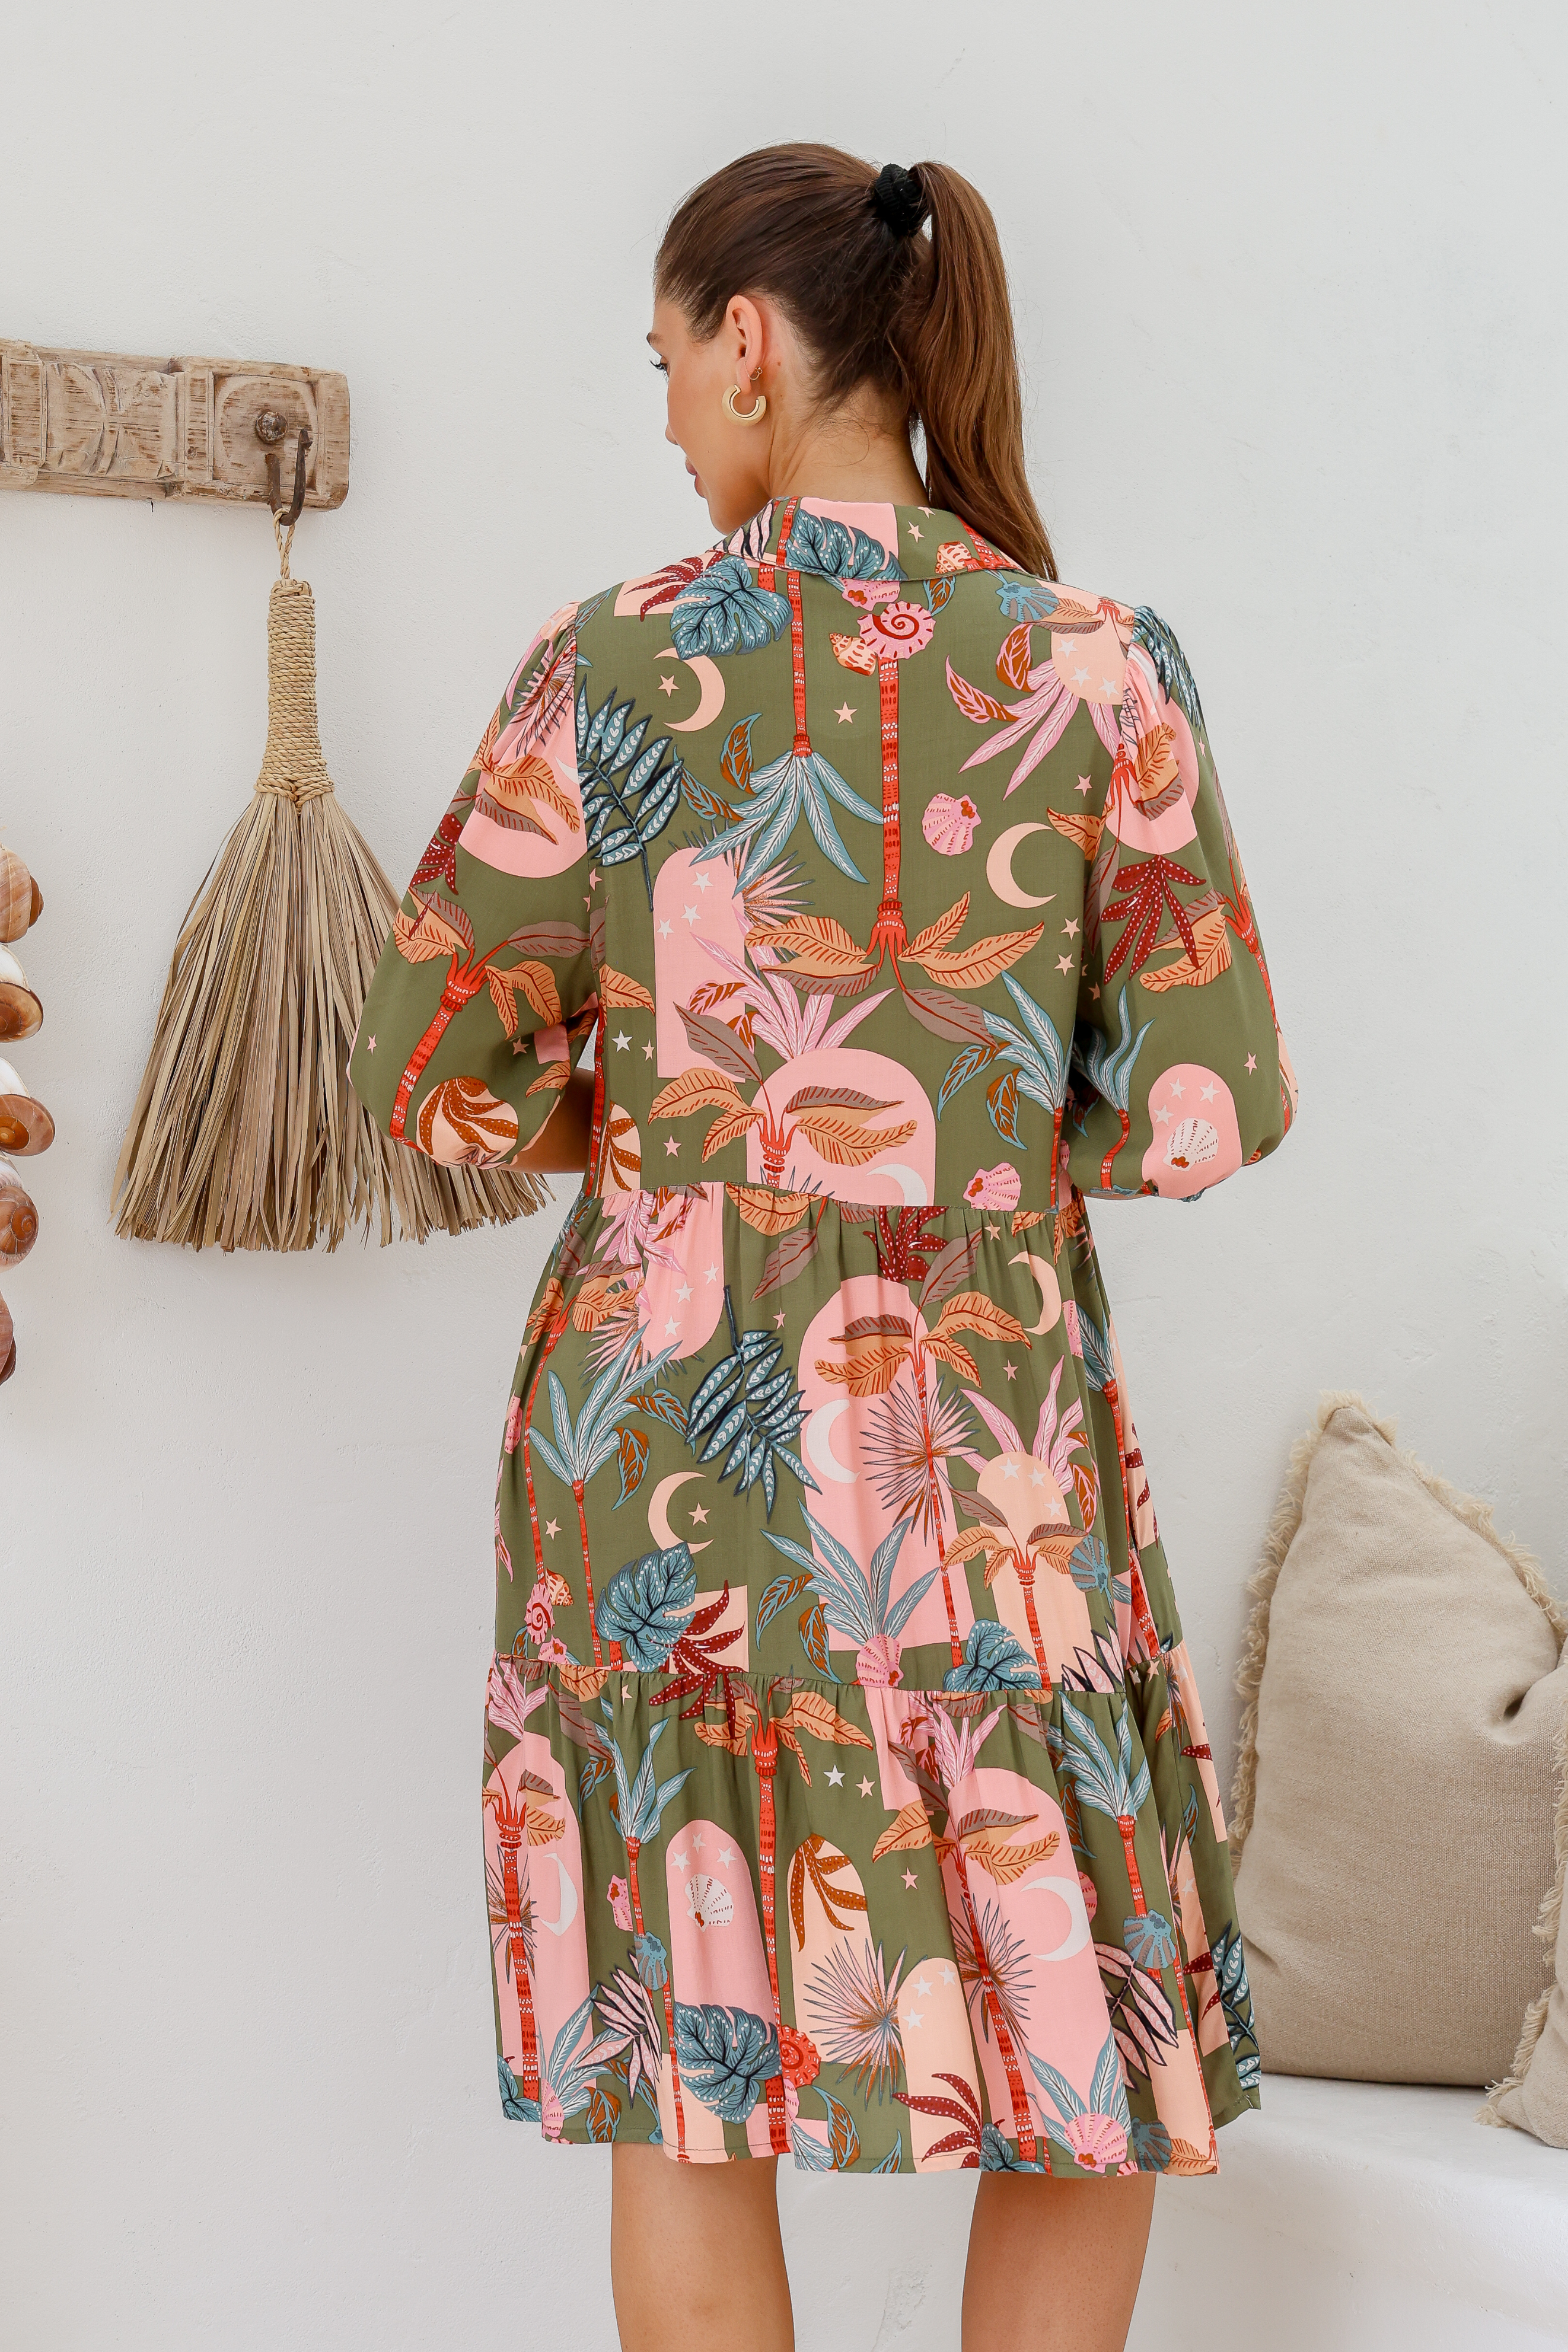 Palermo Dress in Khaki Floral